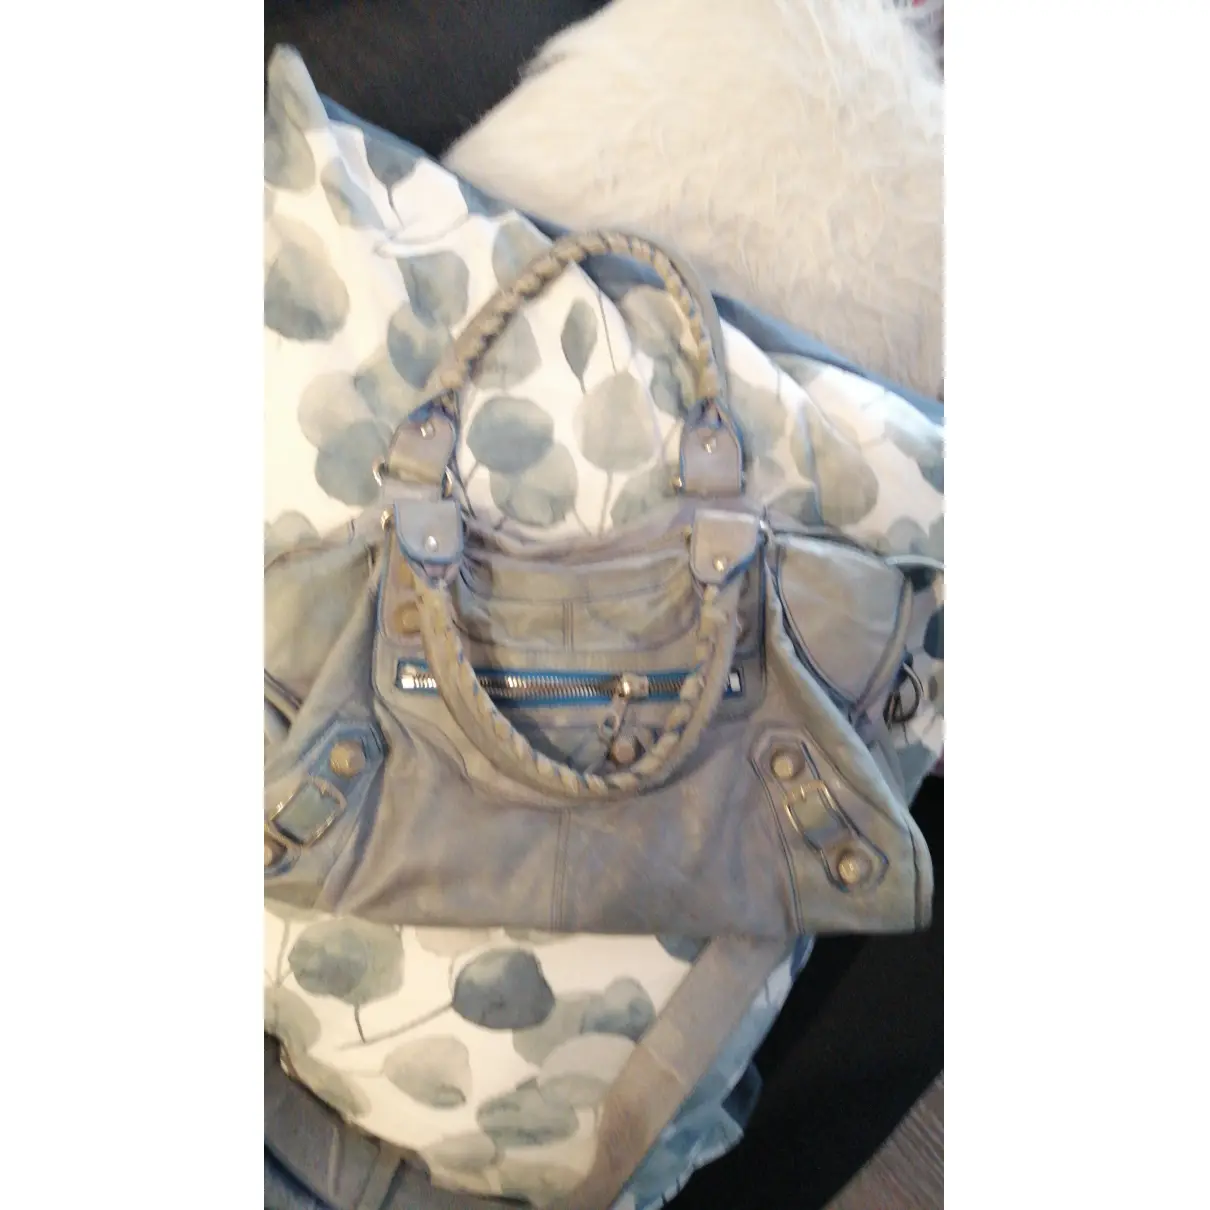 Work leather handbag Balenciaga